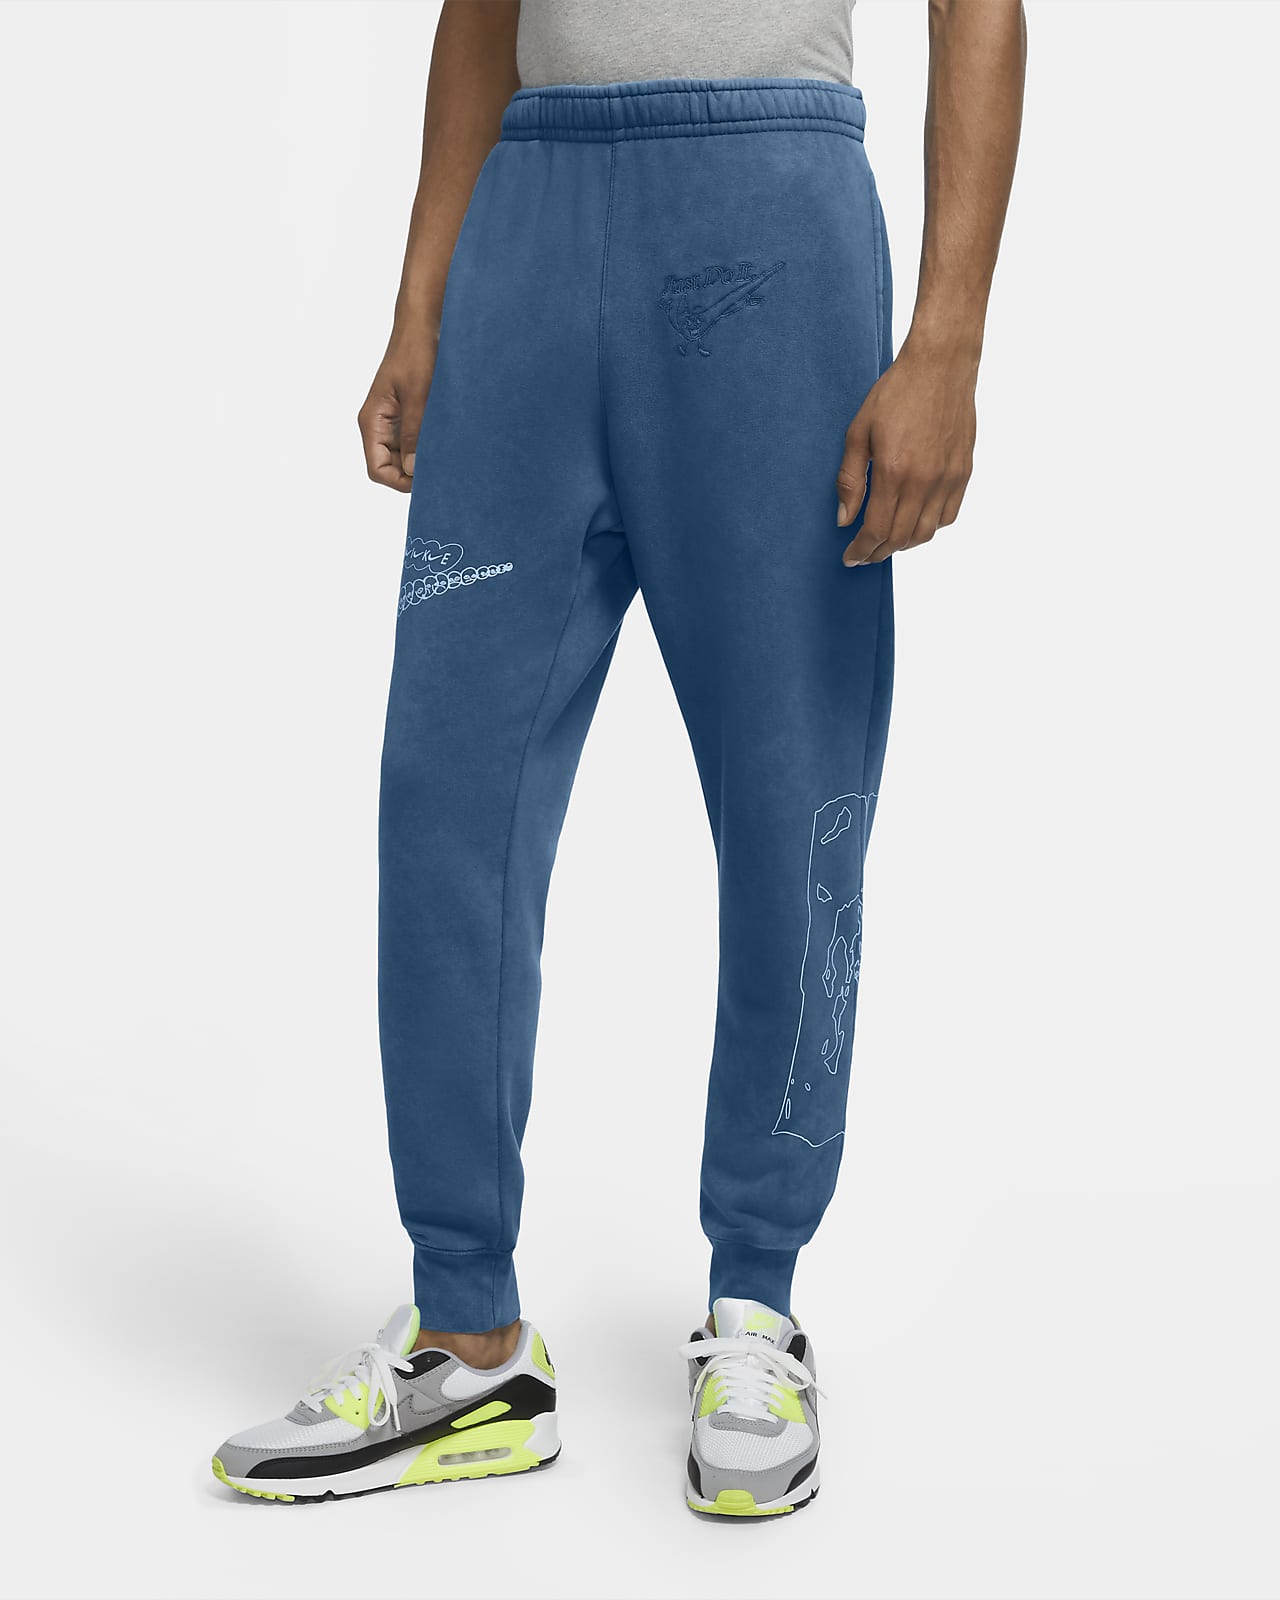 men's nike sportswear air max utility jogger pants